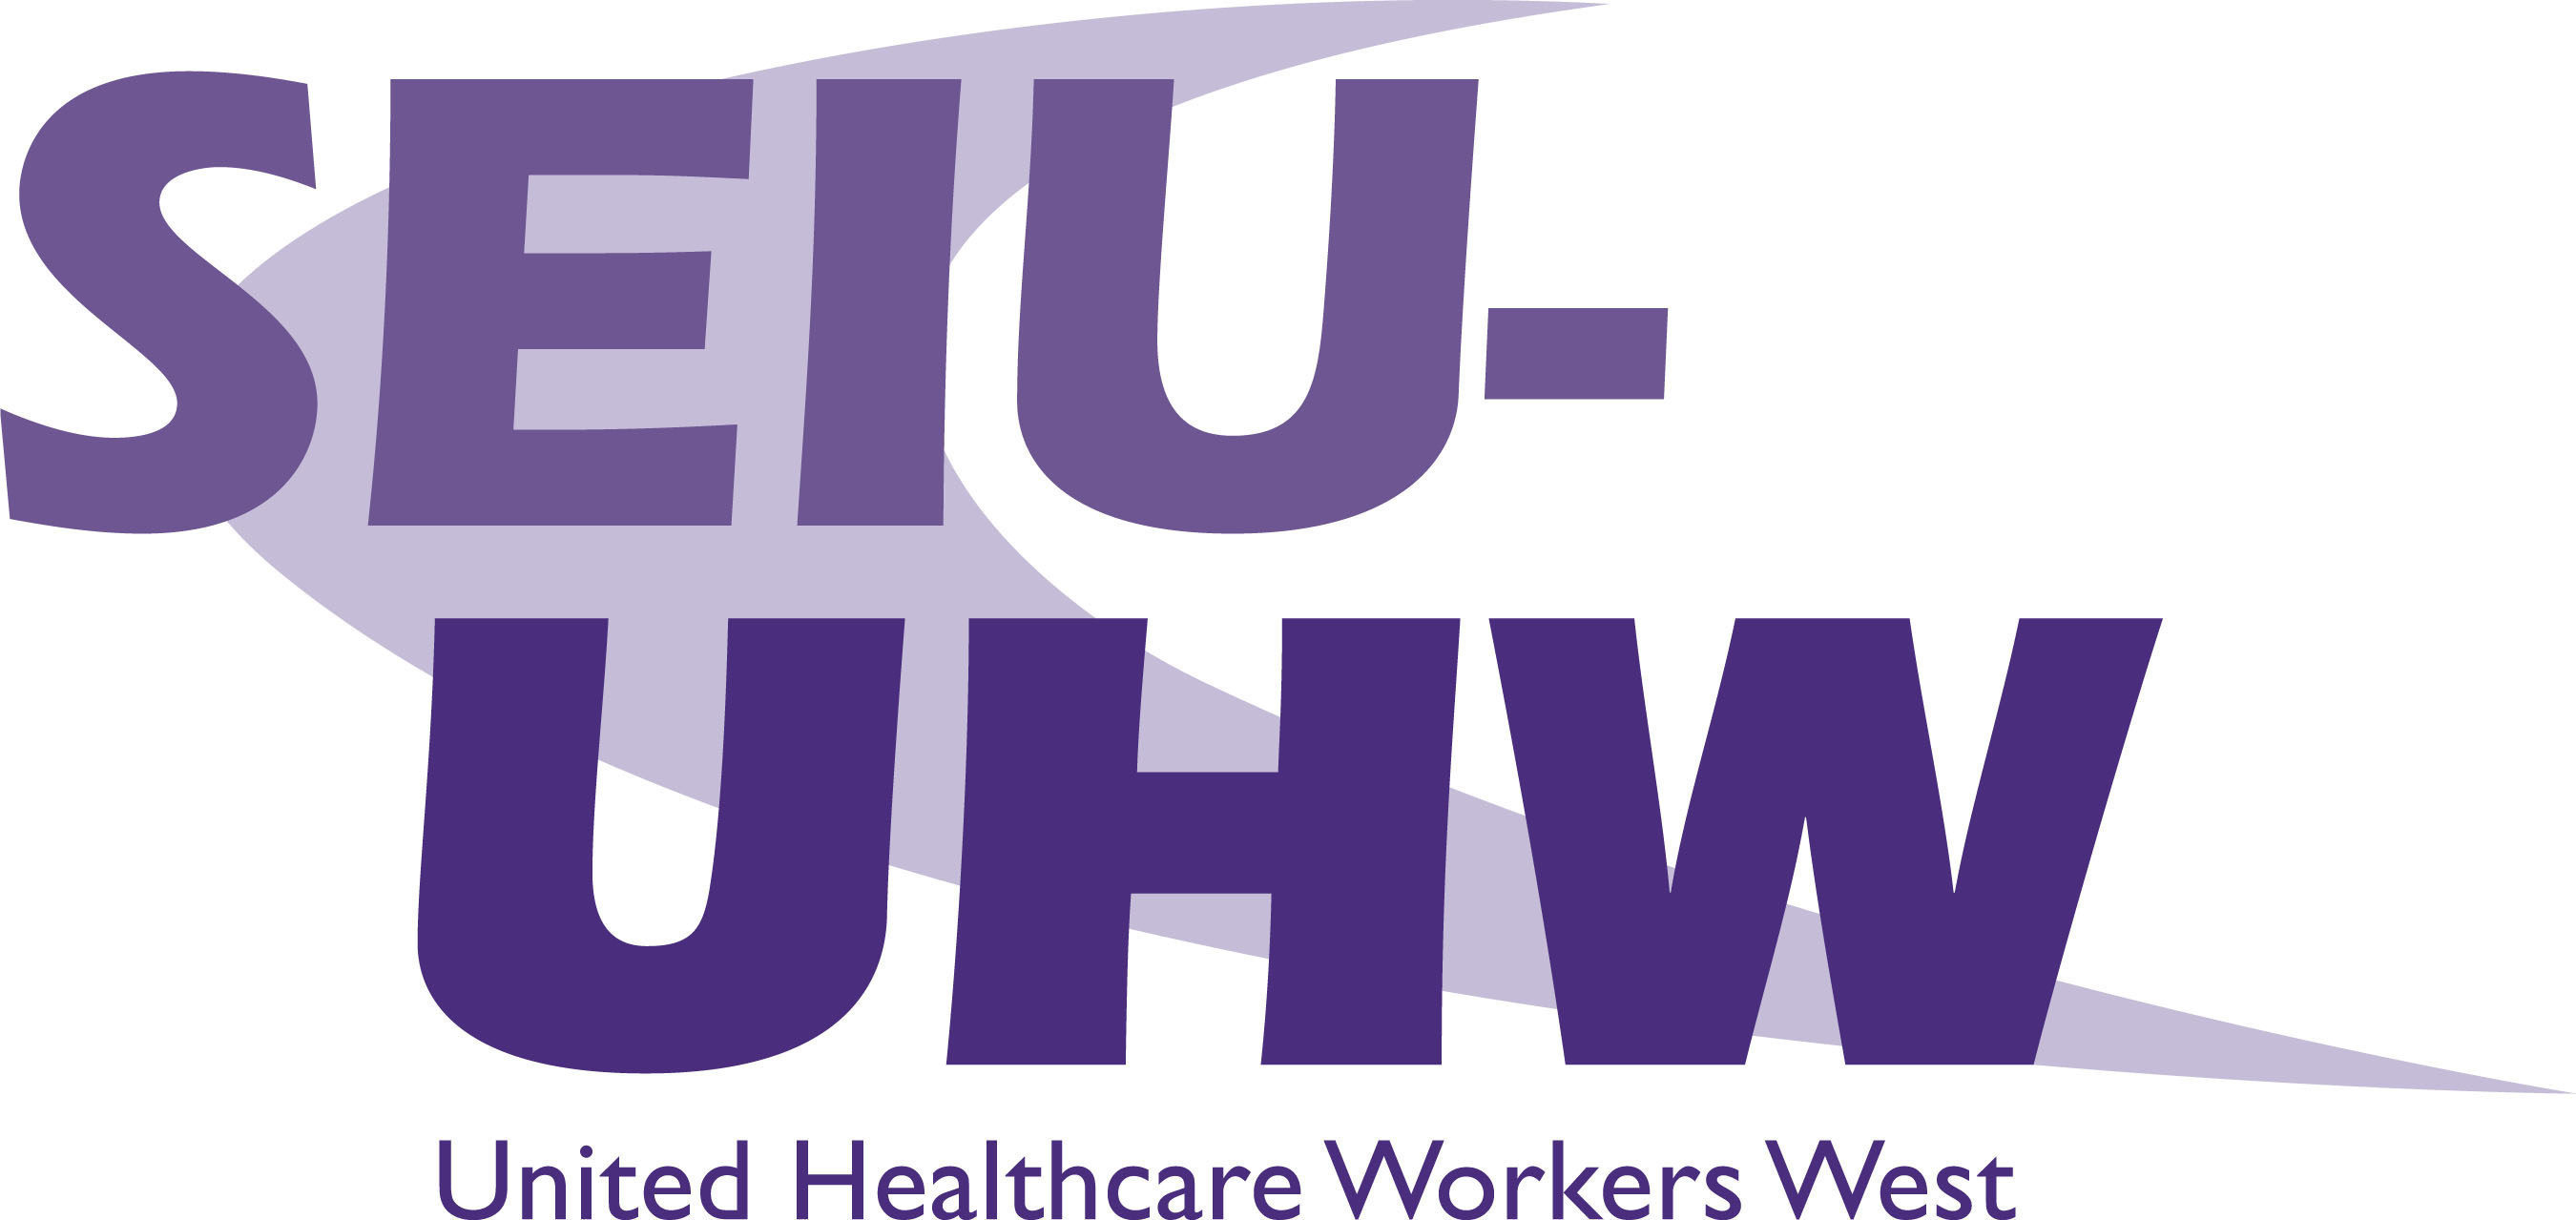 SEIU-United Healthcare Workers West logo.